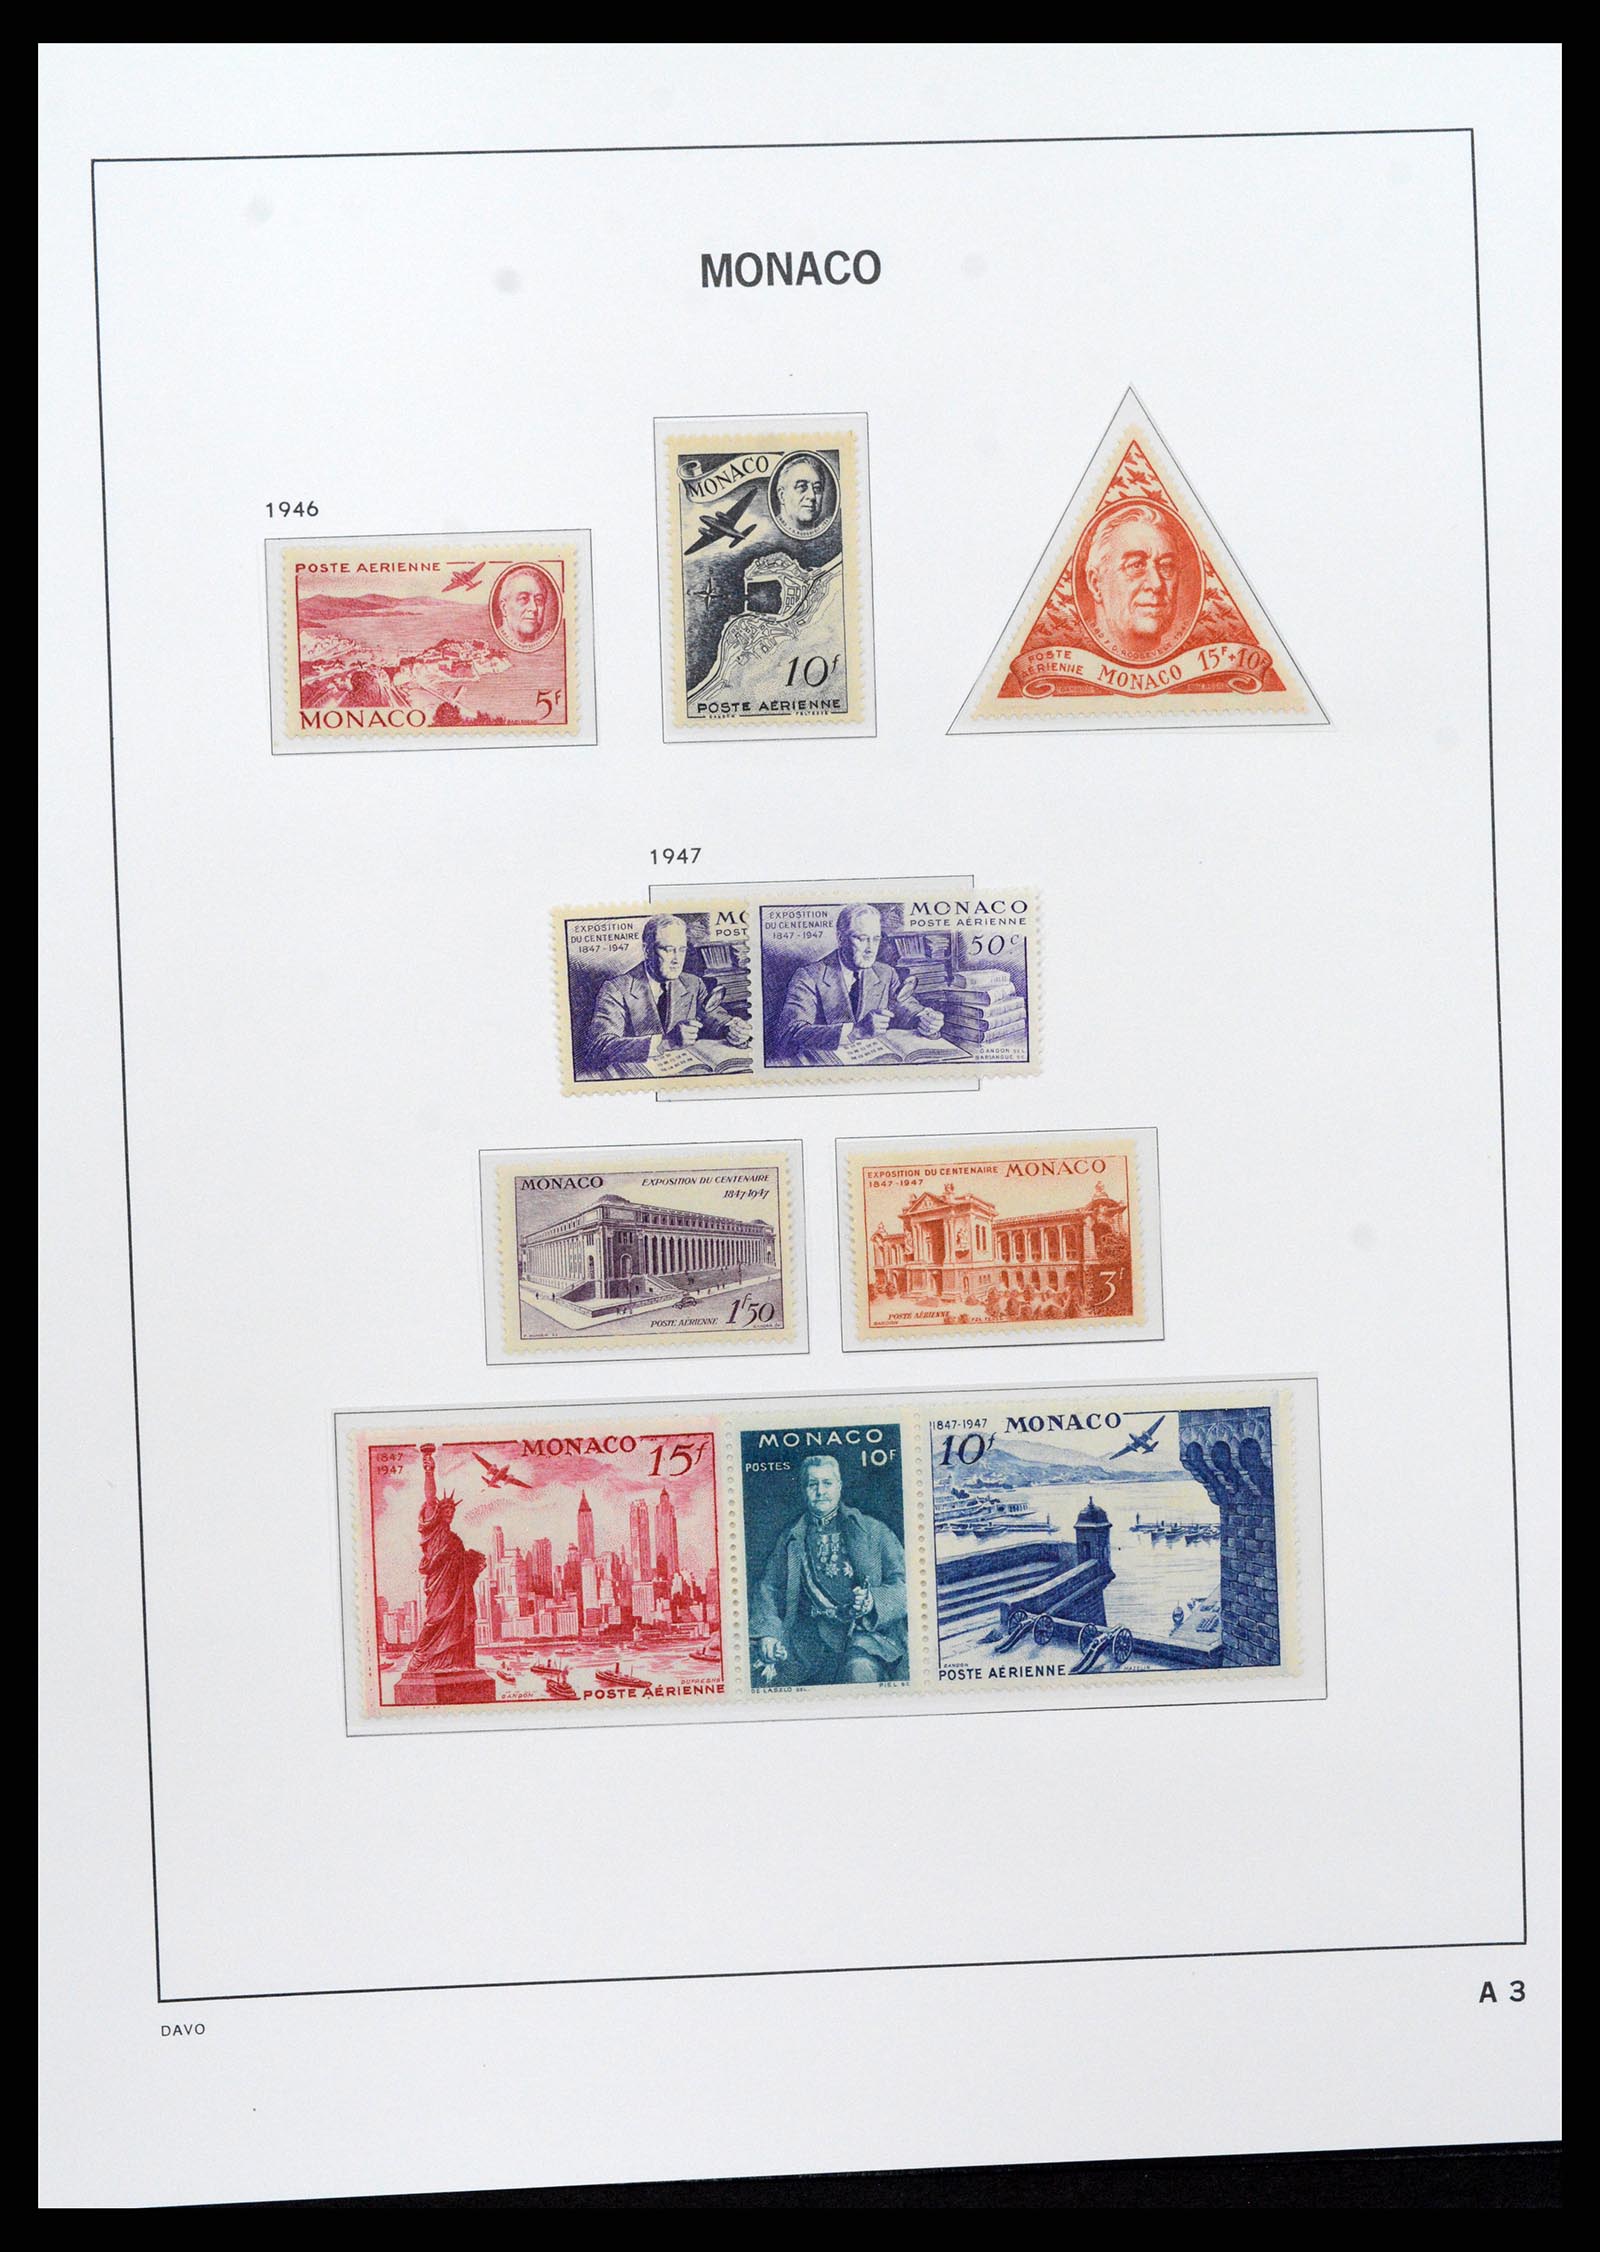 37279 060 - Stamp collection 37279 Monaco 1885-1969.